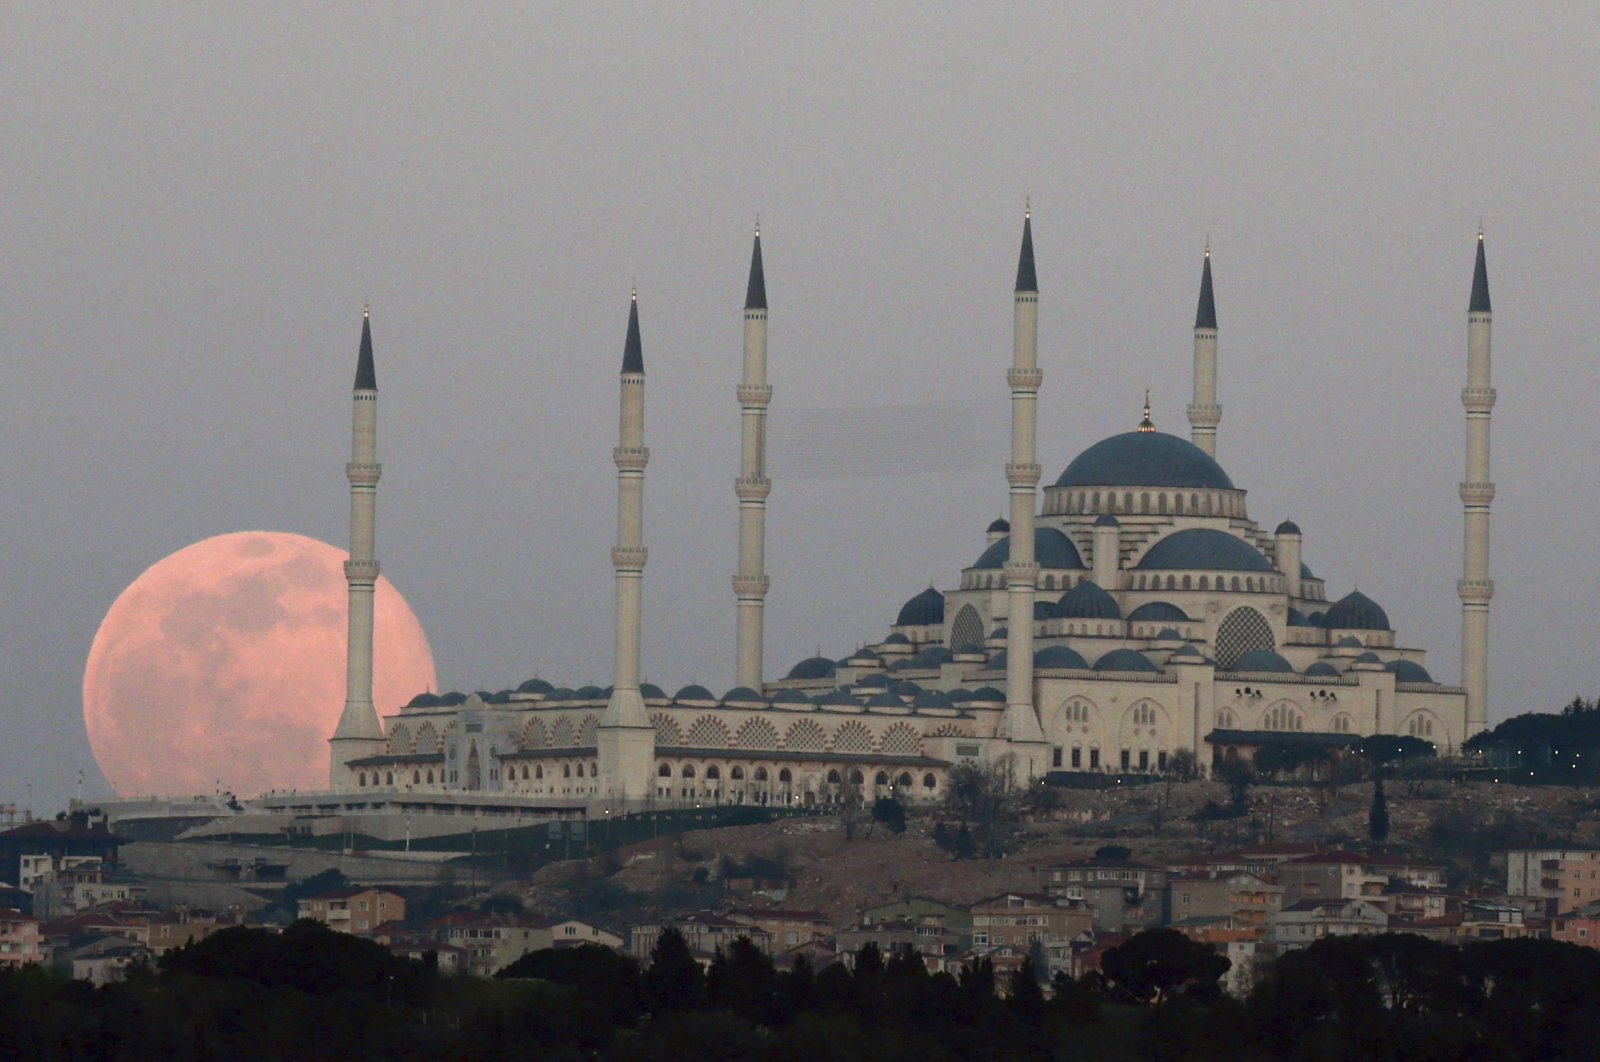 25 juta orang mengunjungi Masjid Agung amlıca Istanbul dalam 3 tahun